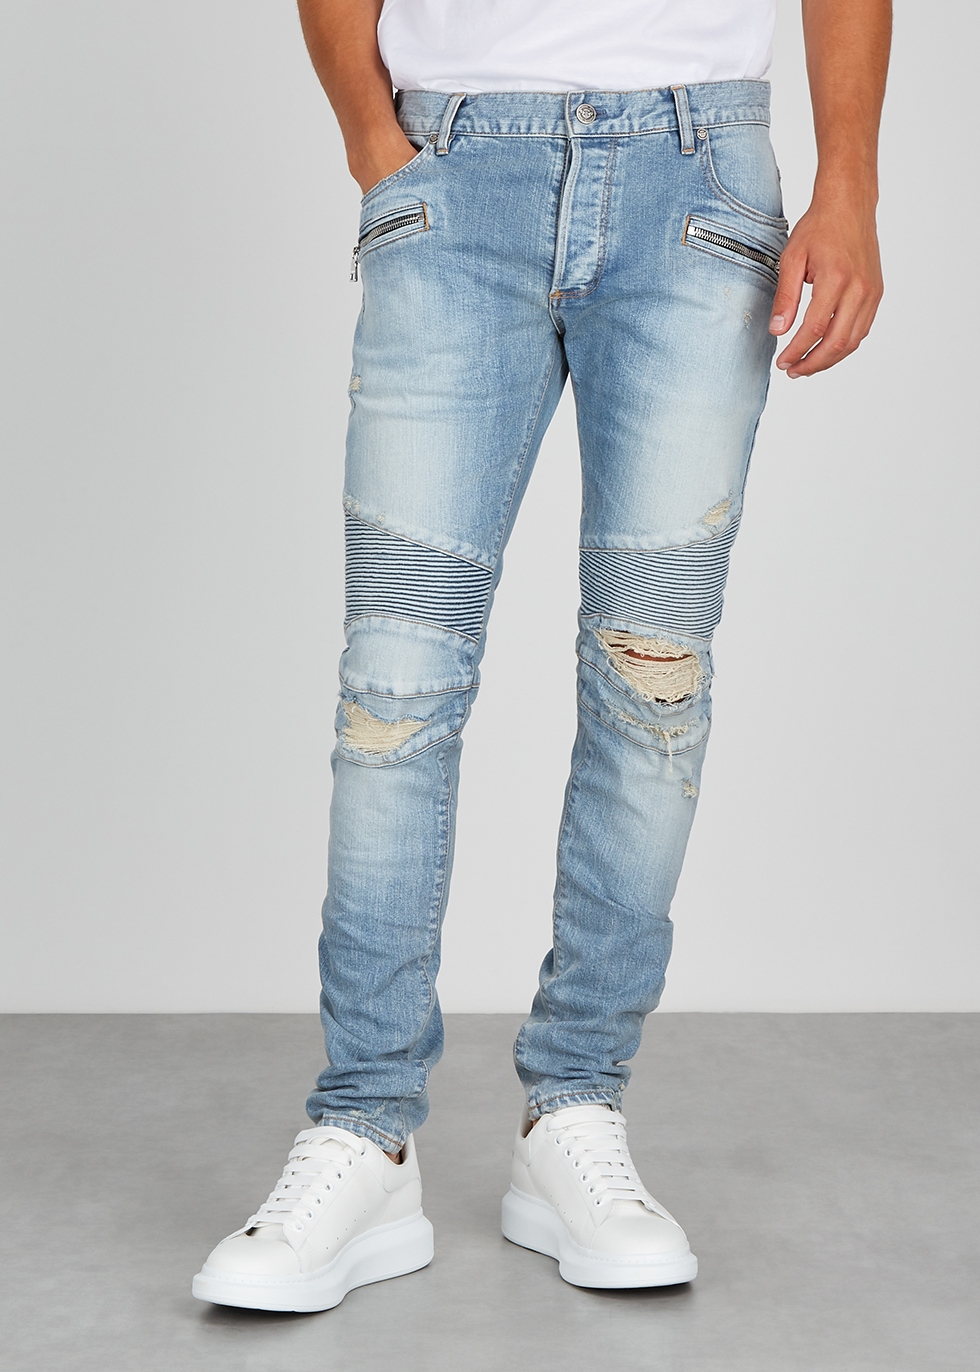 harvey nichols jeans